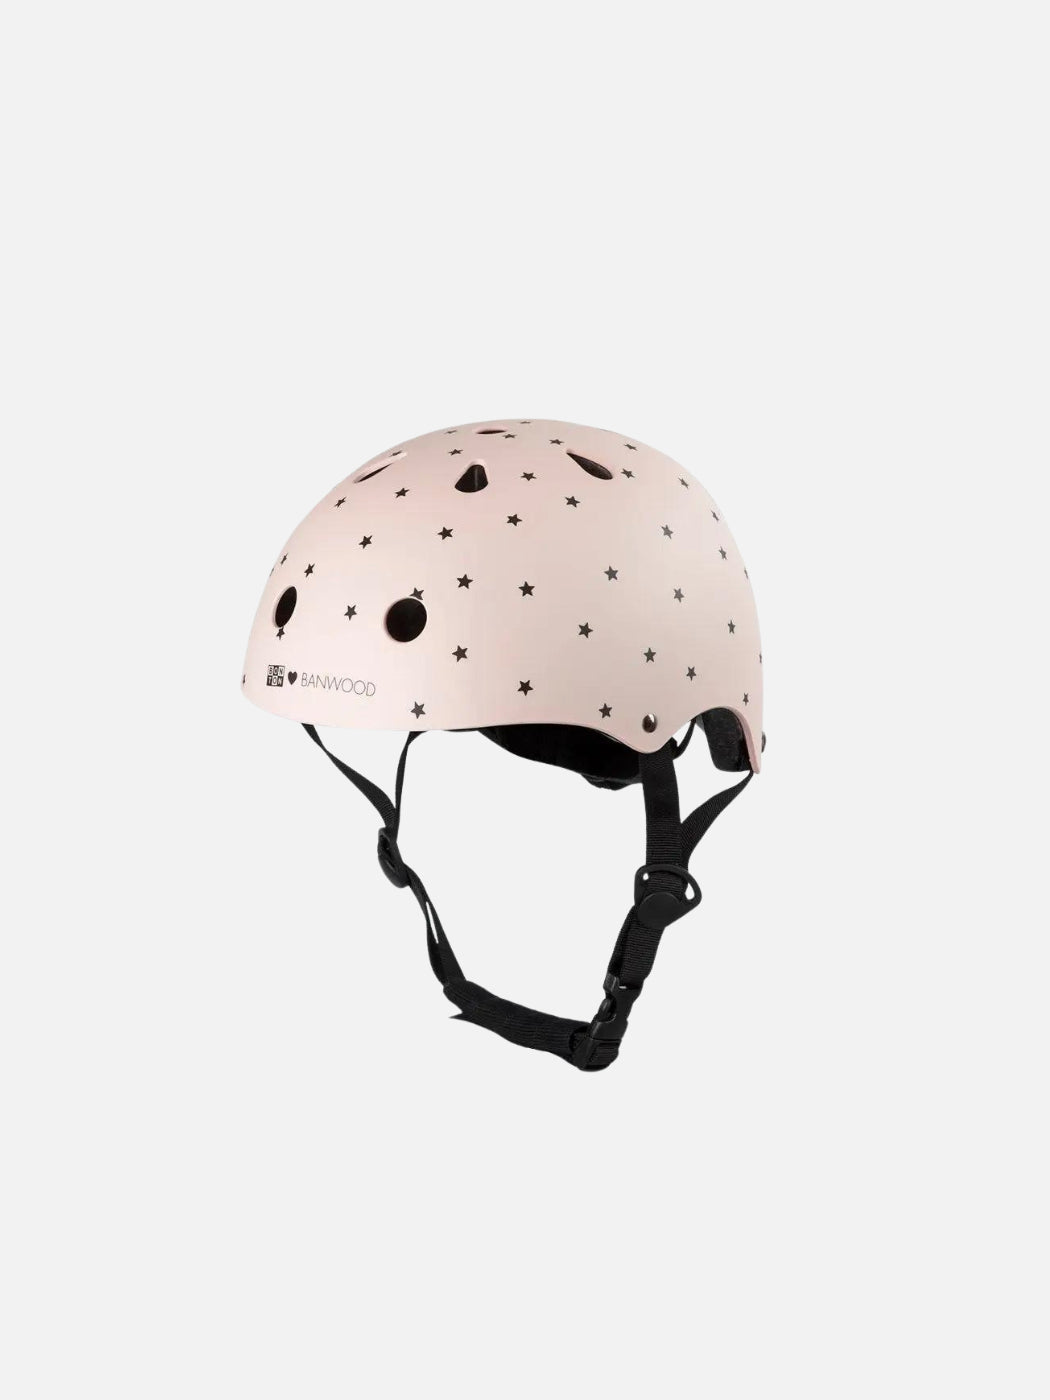 Banwood Classic Helmet - Small